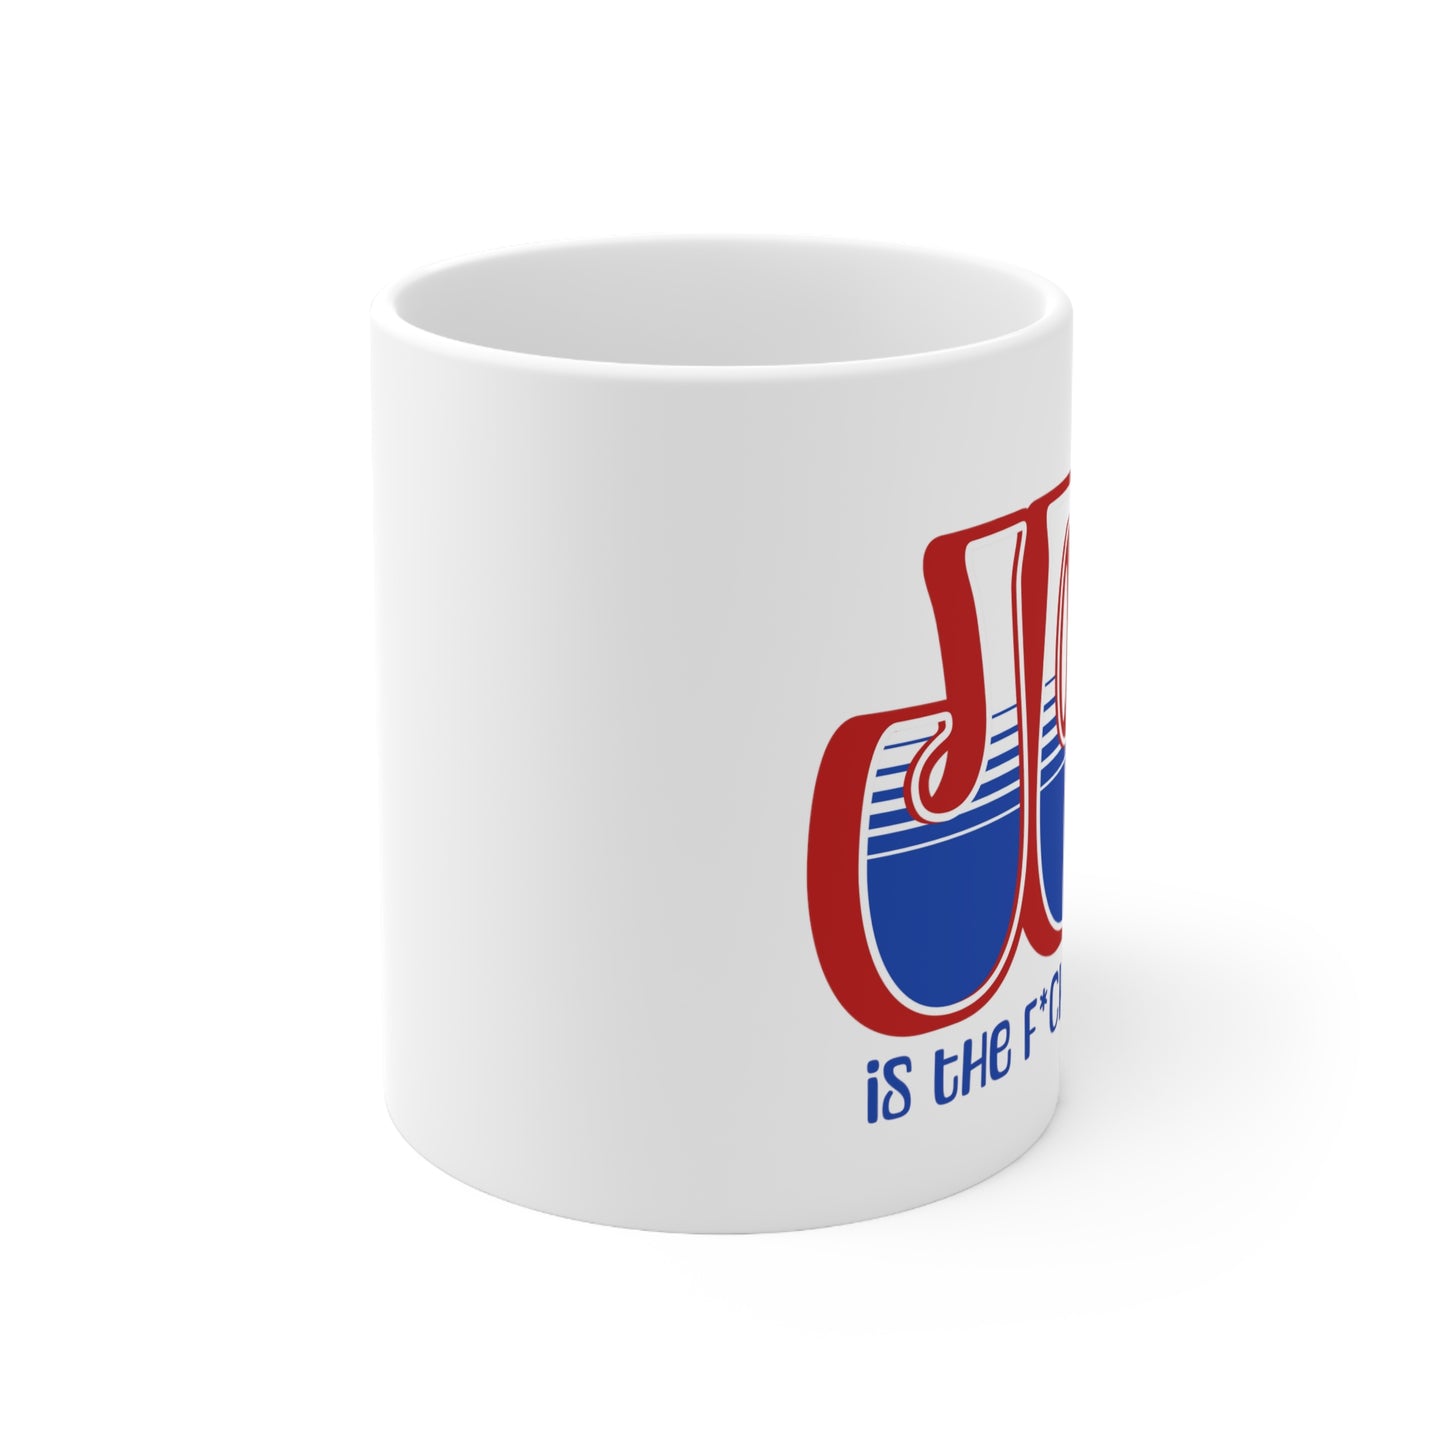 JOY (red white blue) Ceramic Mug 11oz